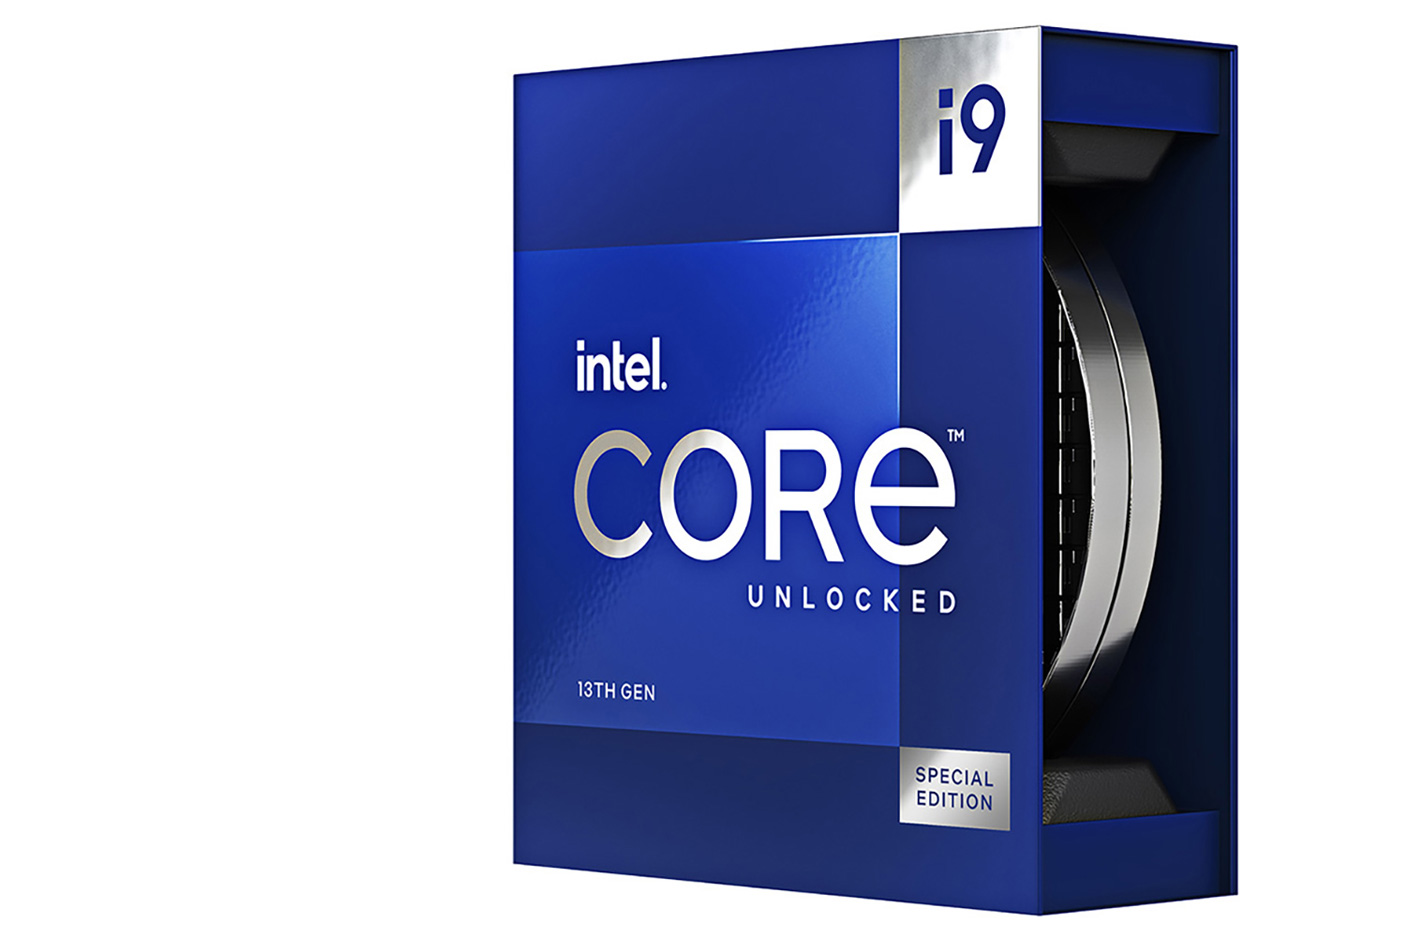 Intel Core i9-13900KS, the world’s fastest desktop processor